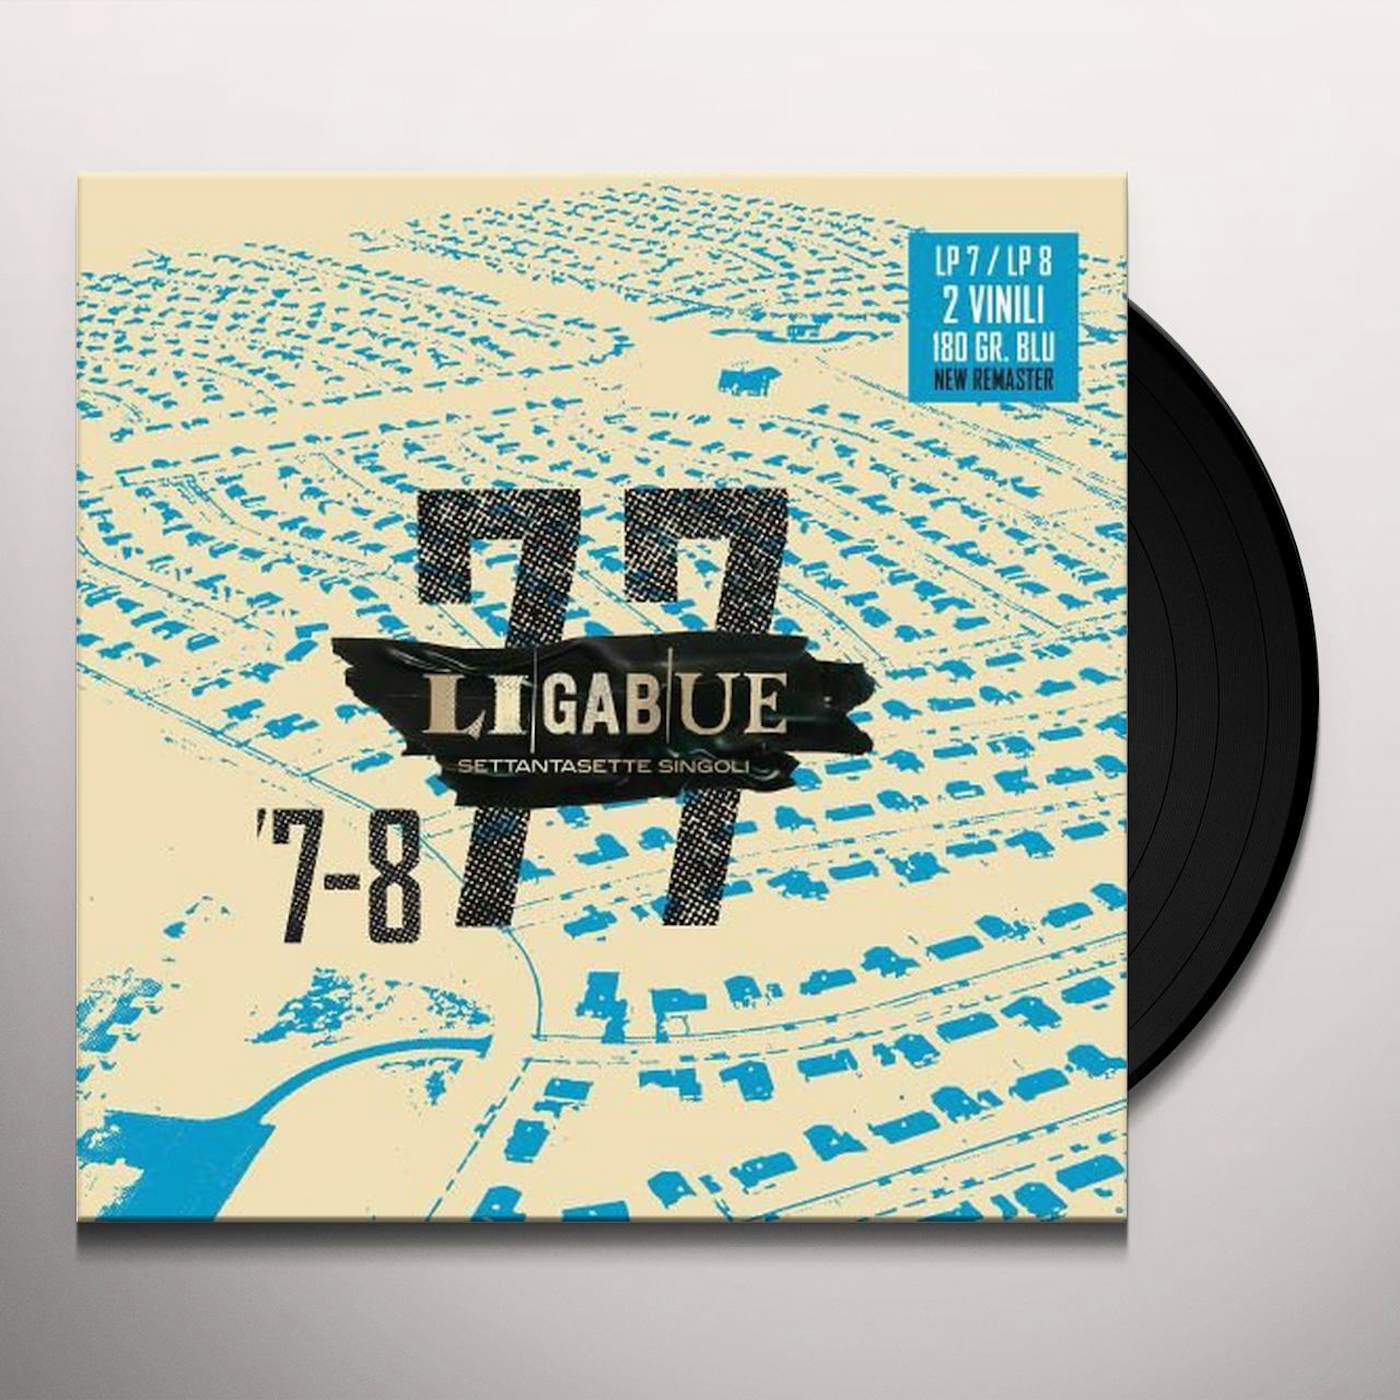 Ligabue 77 SINGOLI / LP 7-LP 8 Vinyl Record